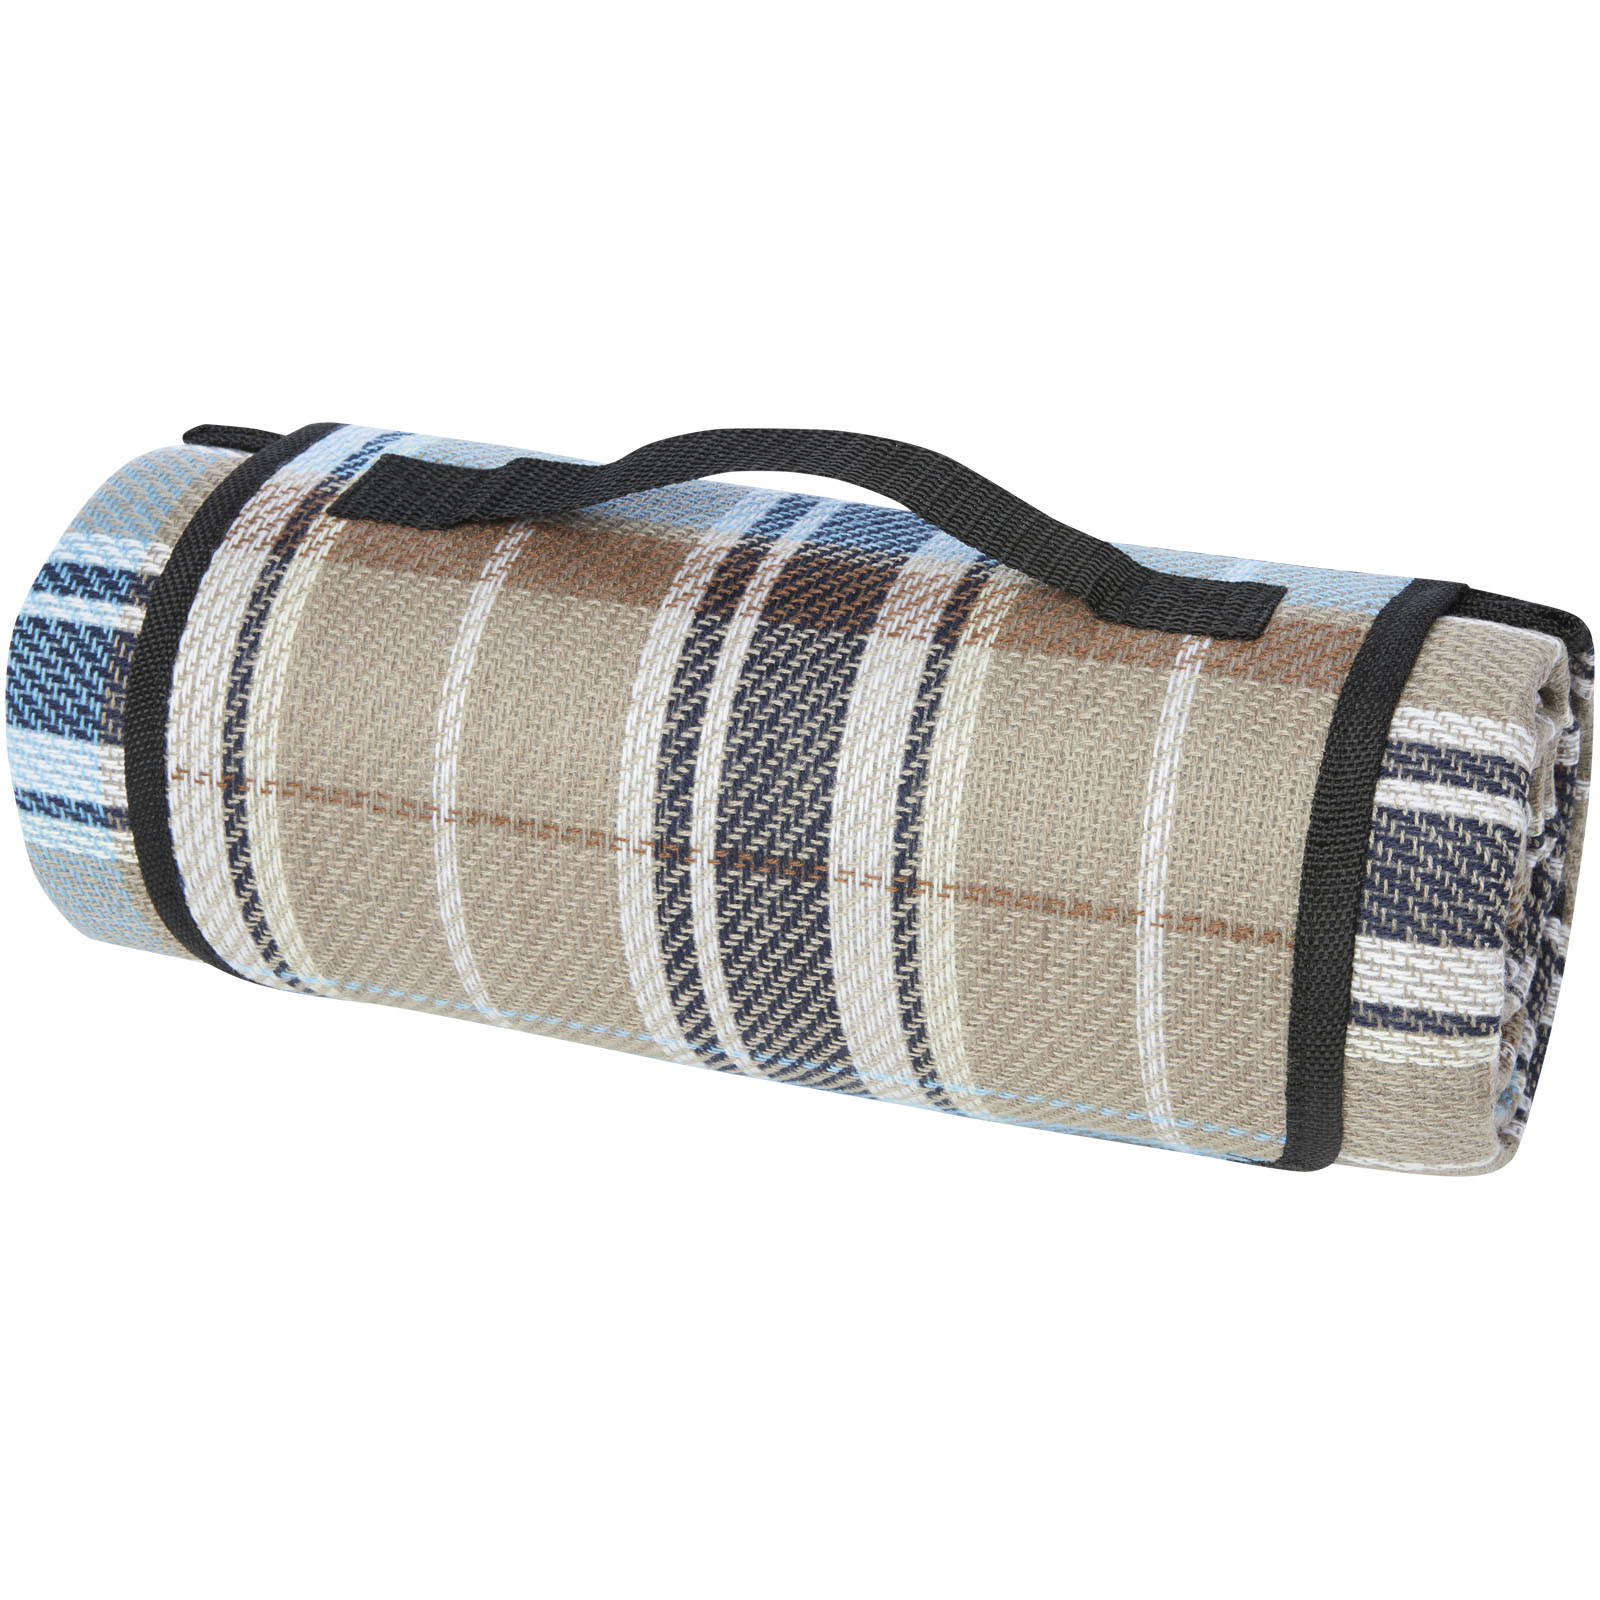 Blankets - Sedum picnic blanket